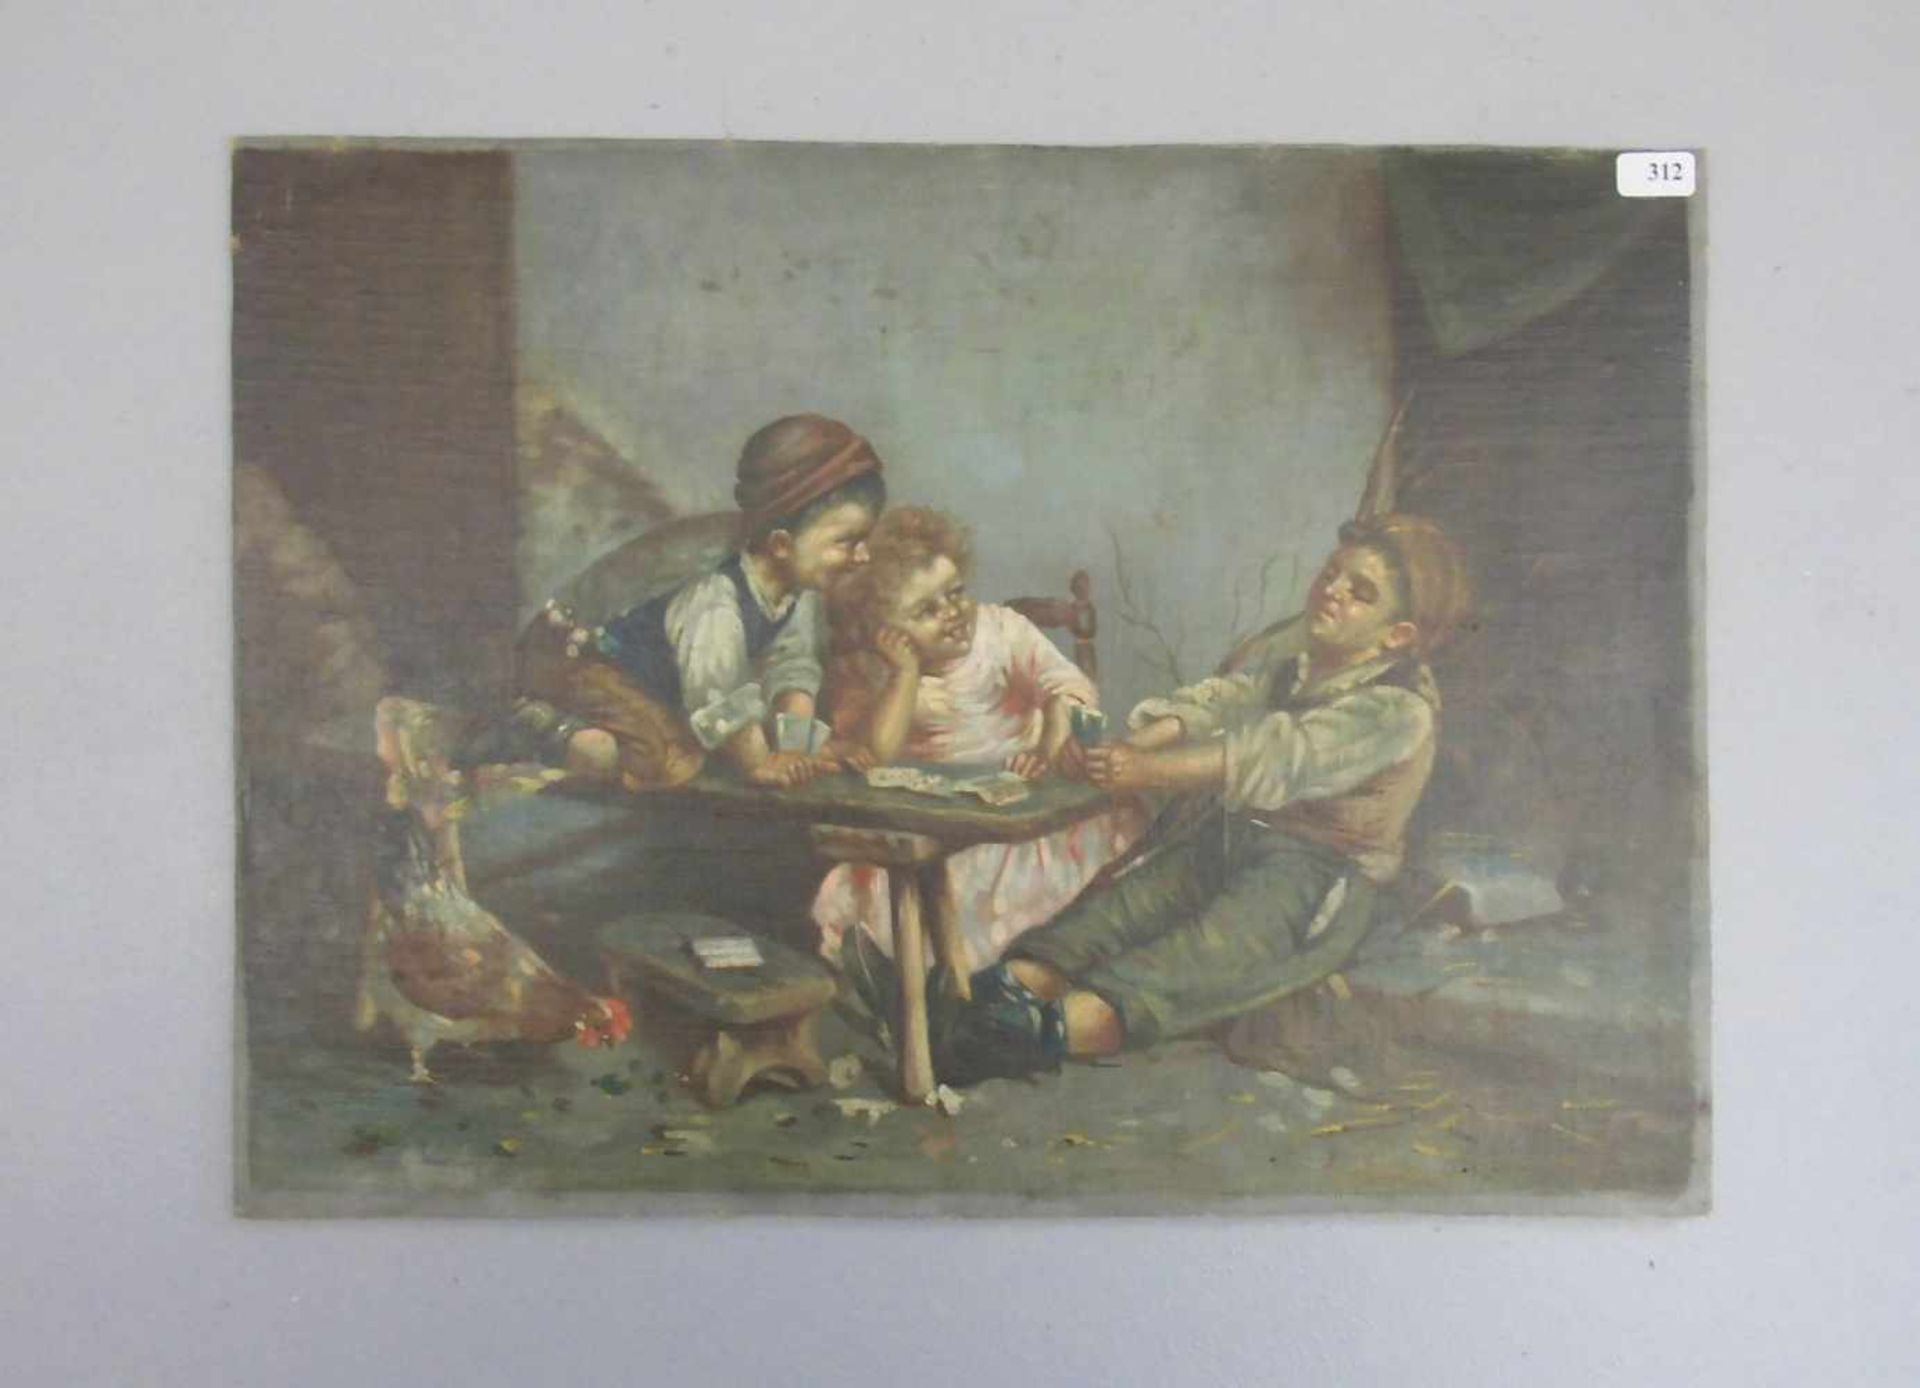 DE LUISE, ENRICO (Neapel 1840-1915), Gemälde / painting: "Kinder beim Kartenspiel", Öl auf